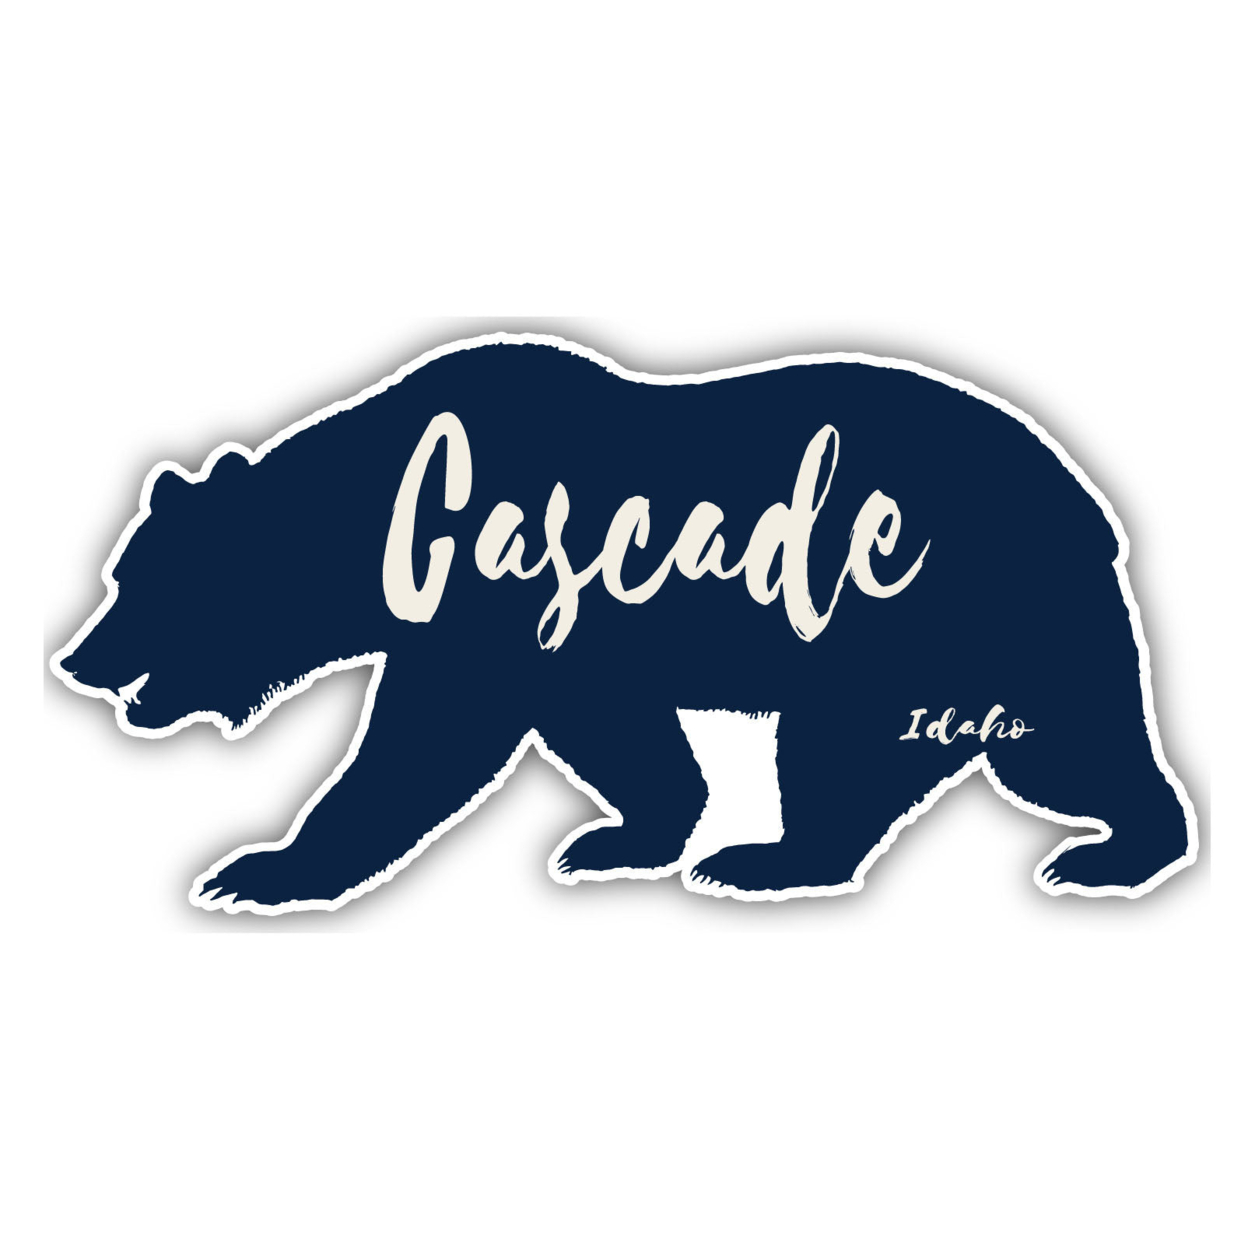 Cascade Idaho Souvenir Decorative Stickers (Choose Theme And Size) - Single Unit, 10-Inch, Bear